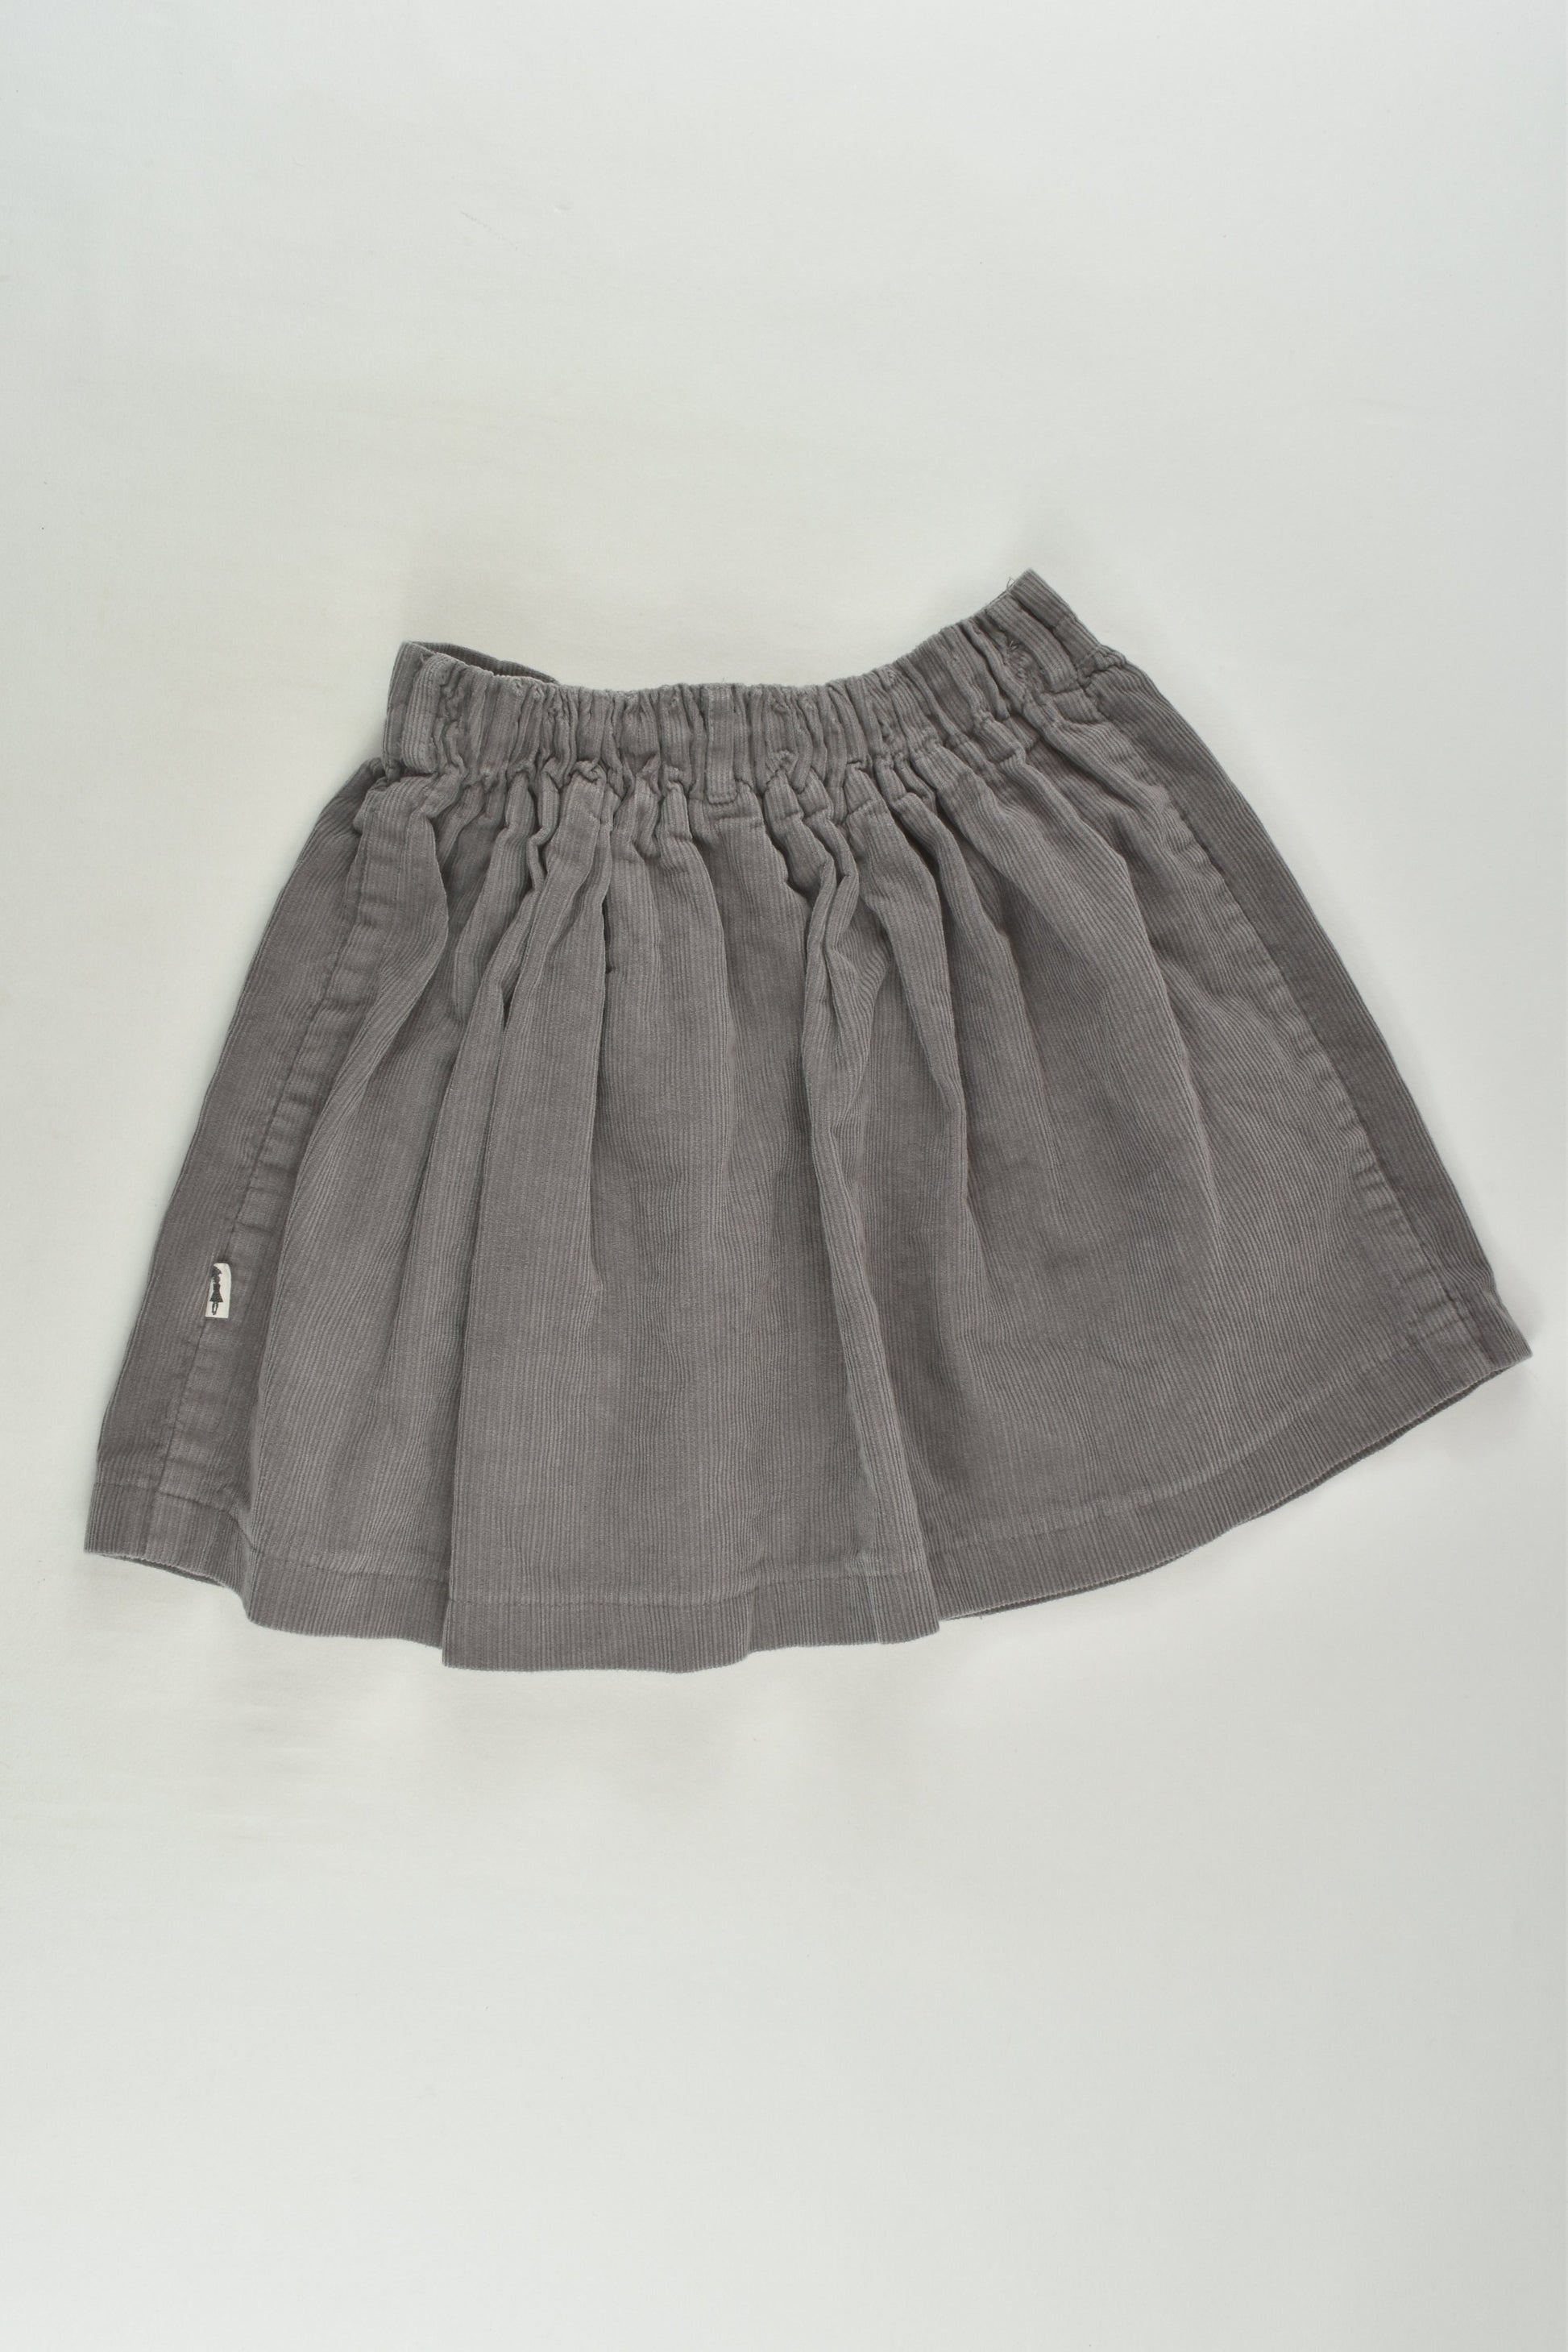 Lacey Lane Size 4 Cord Skirt